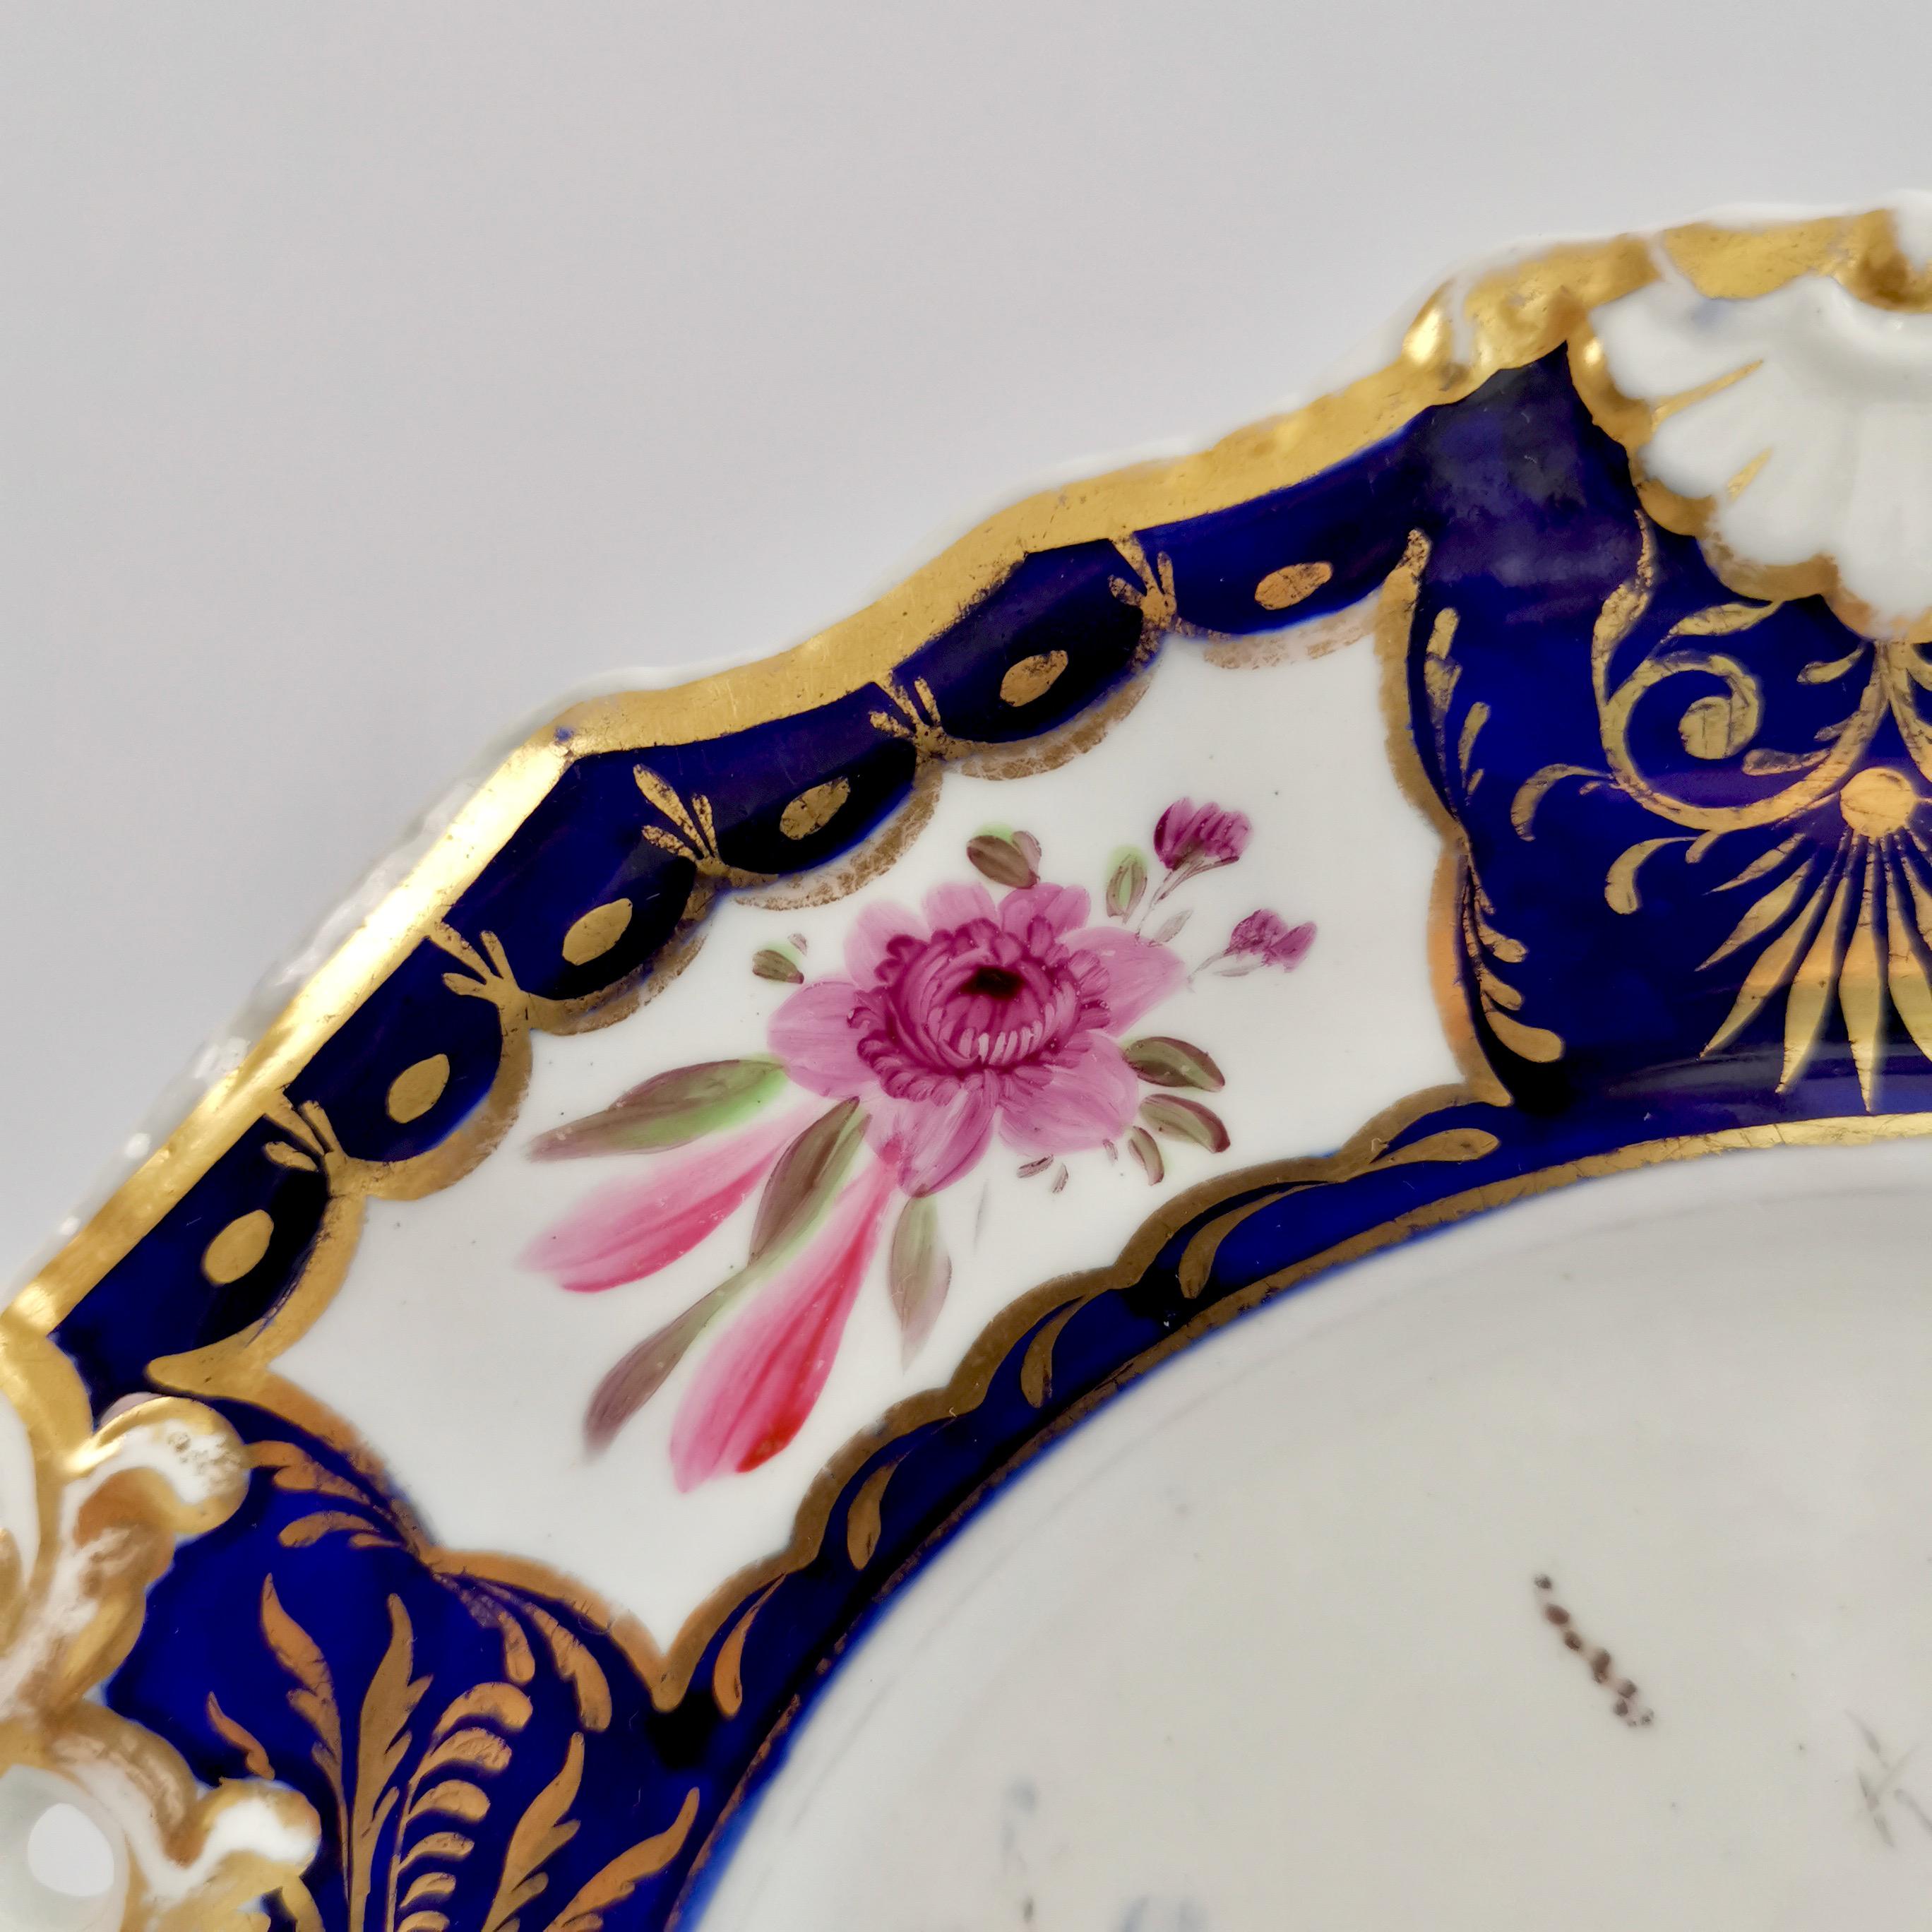 New Hall Porcelain Part Dessert Service, Cobalt Blue, Flowers, Regency 1824-1830 8